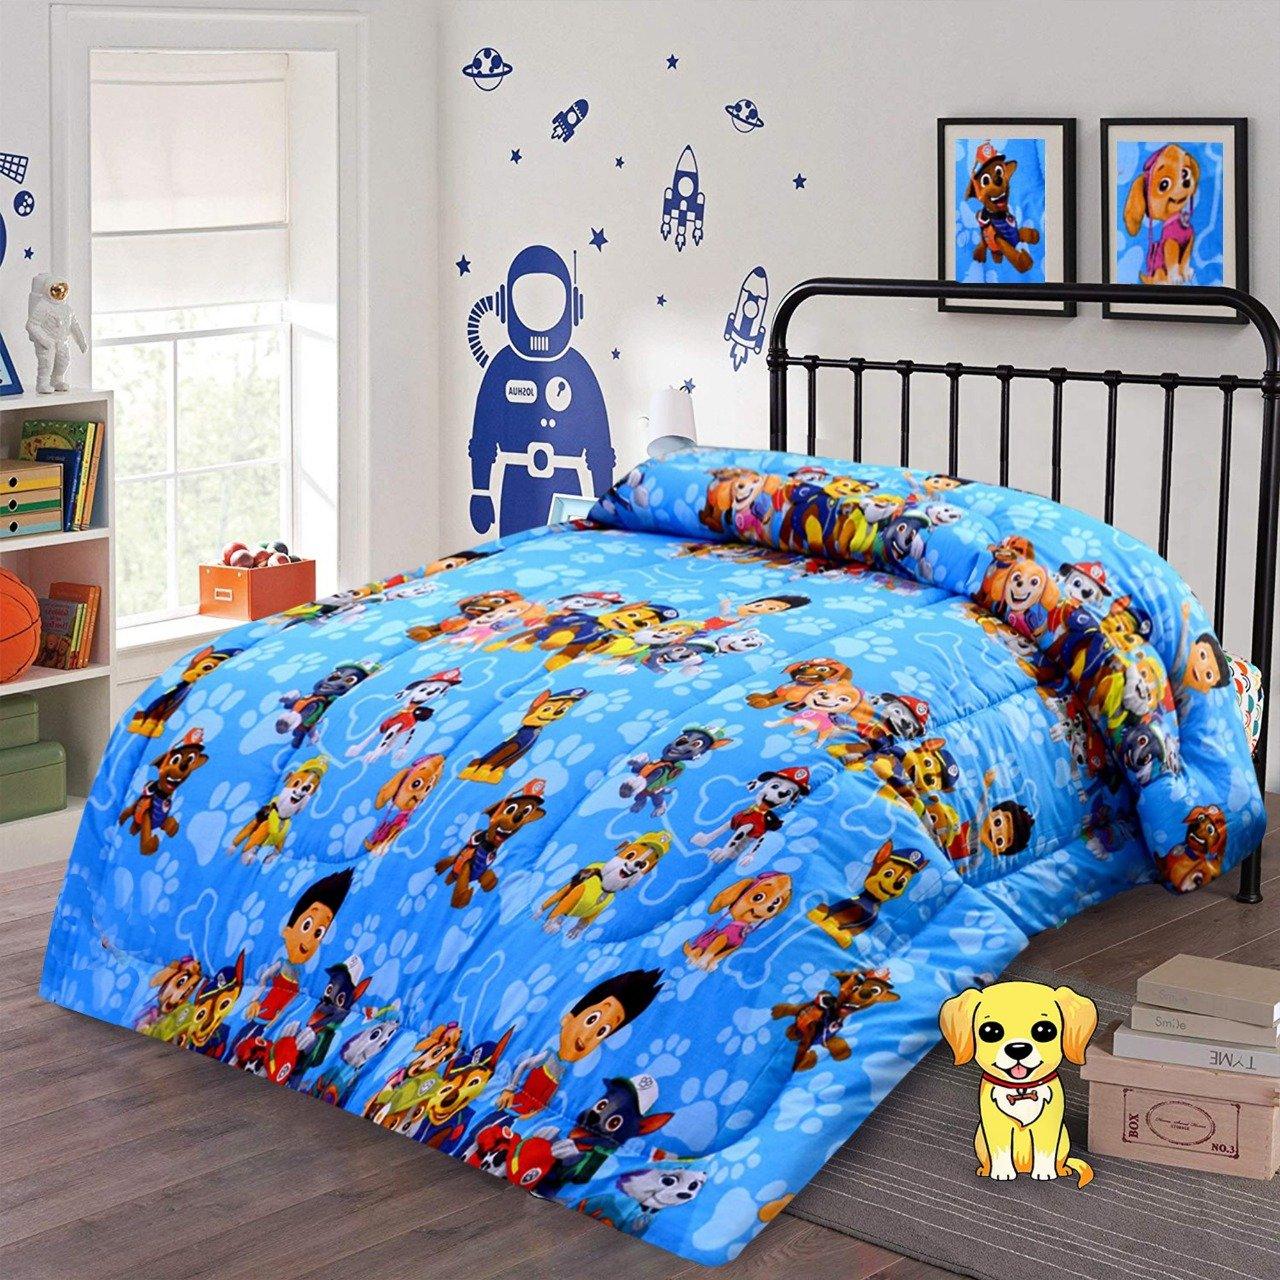 Single Kids Printed Comforter Set -03 - 92Bedding